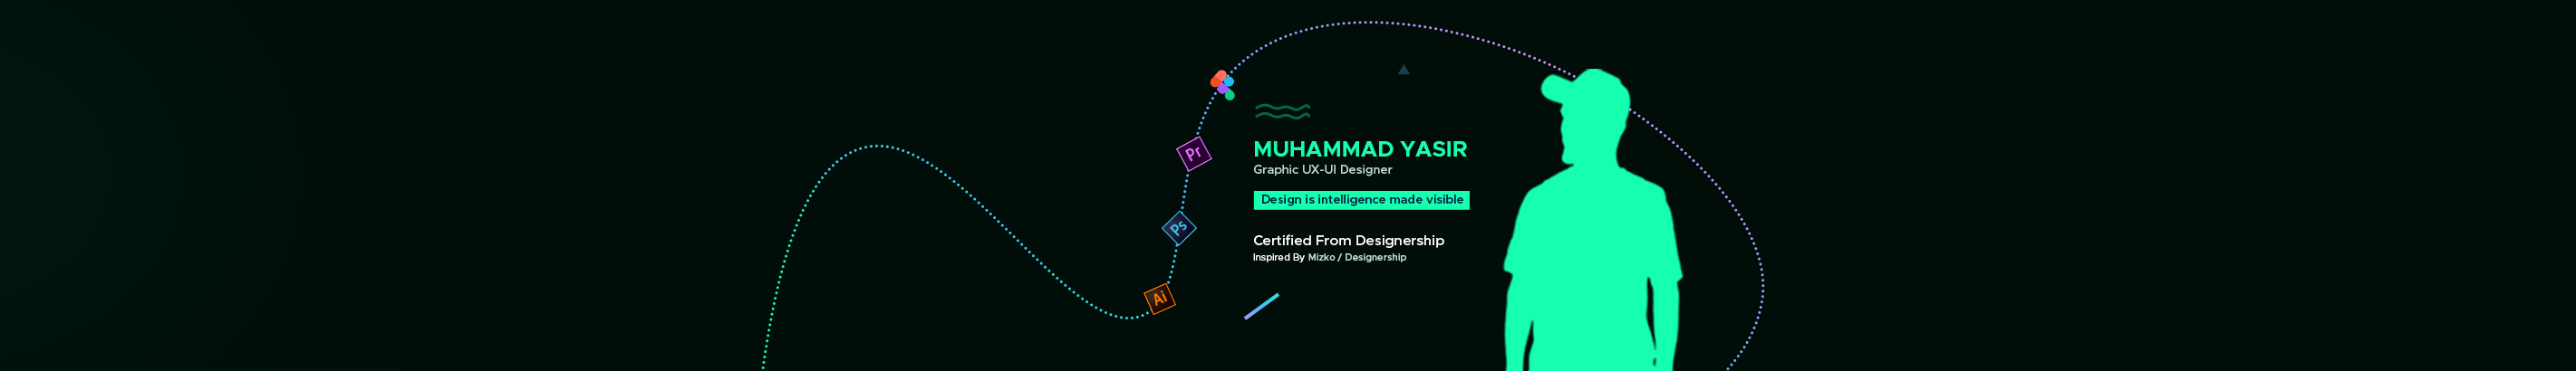 muhammad yasir khan's profile banner